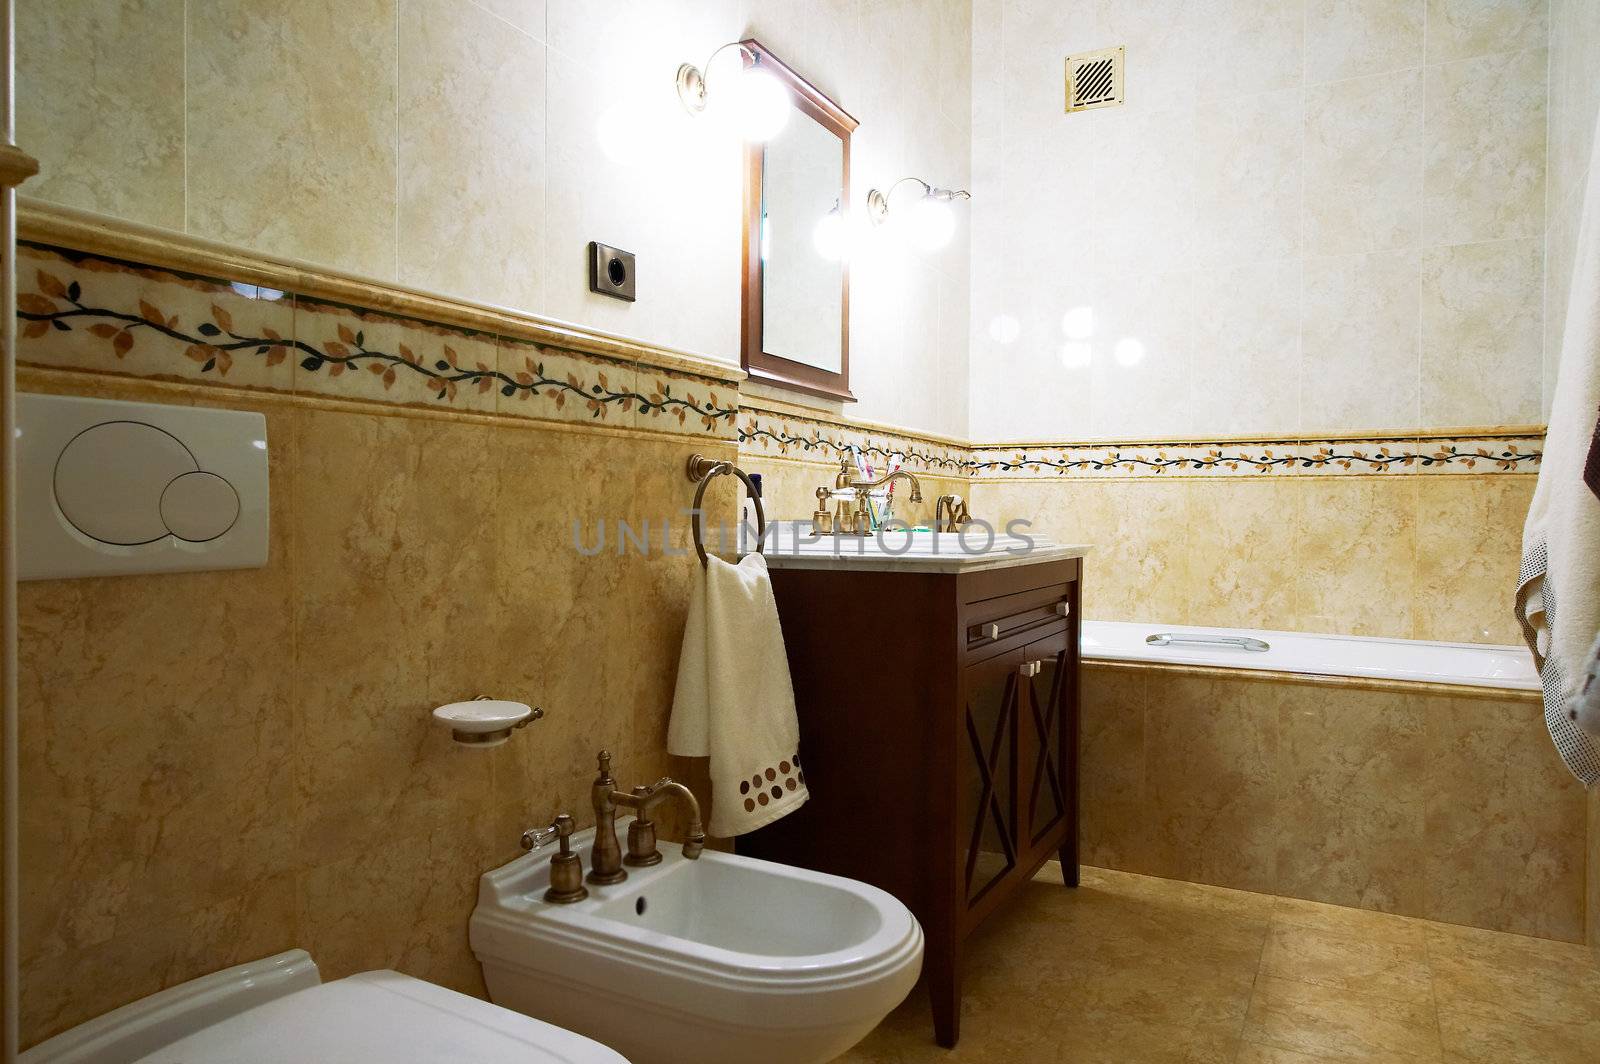 Bathroom in old style in modern hotel